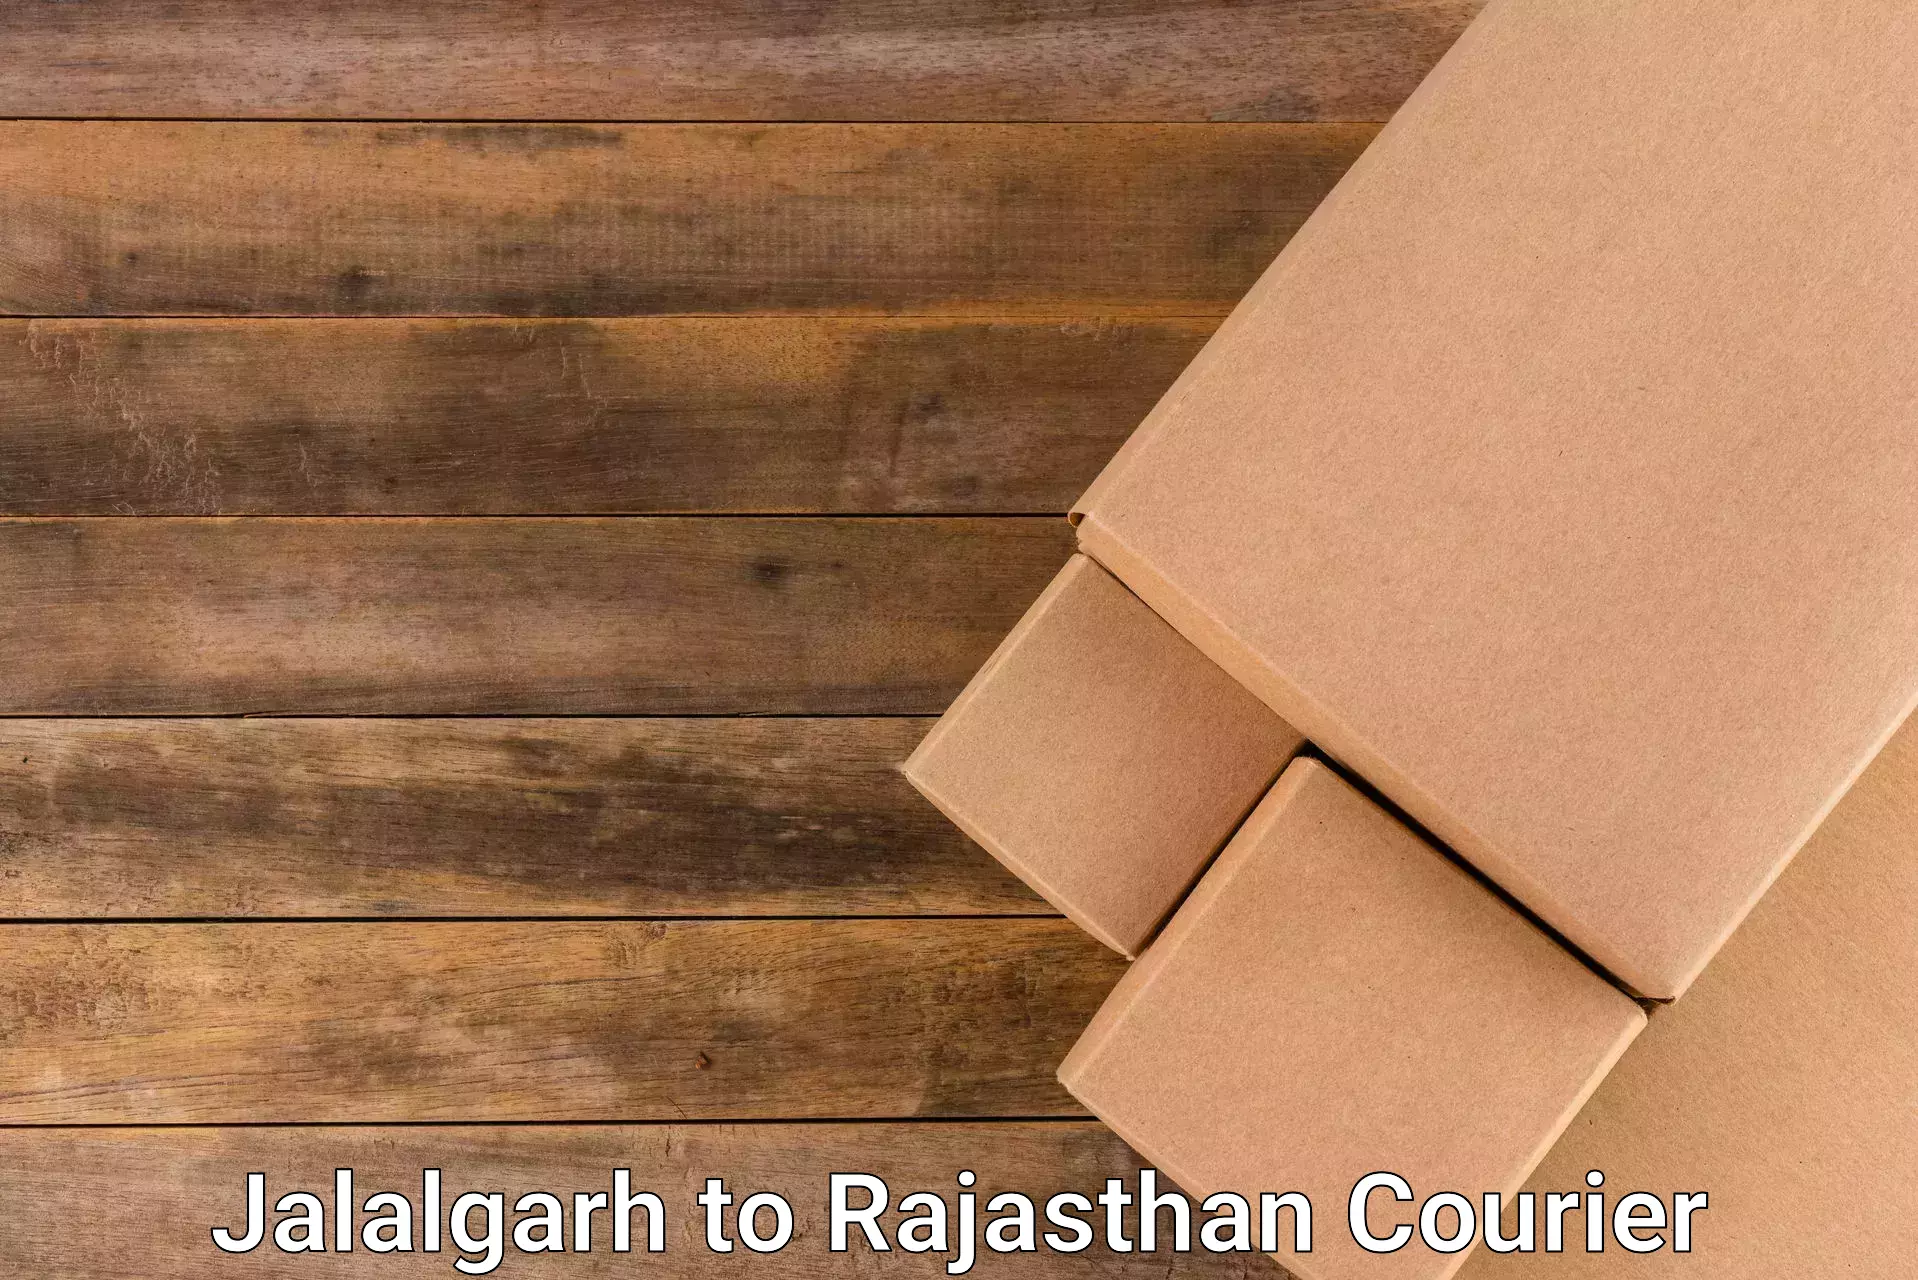 Courier service booking Jalalgarh to Phulera